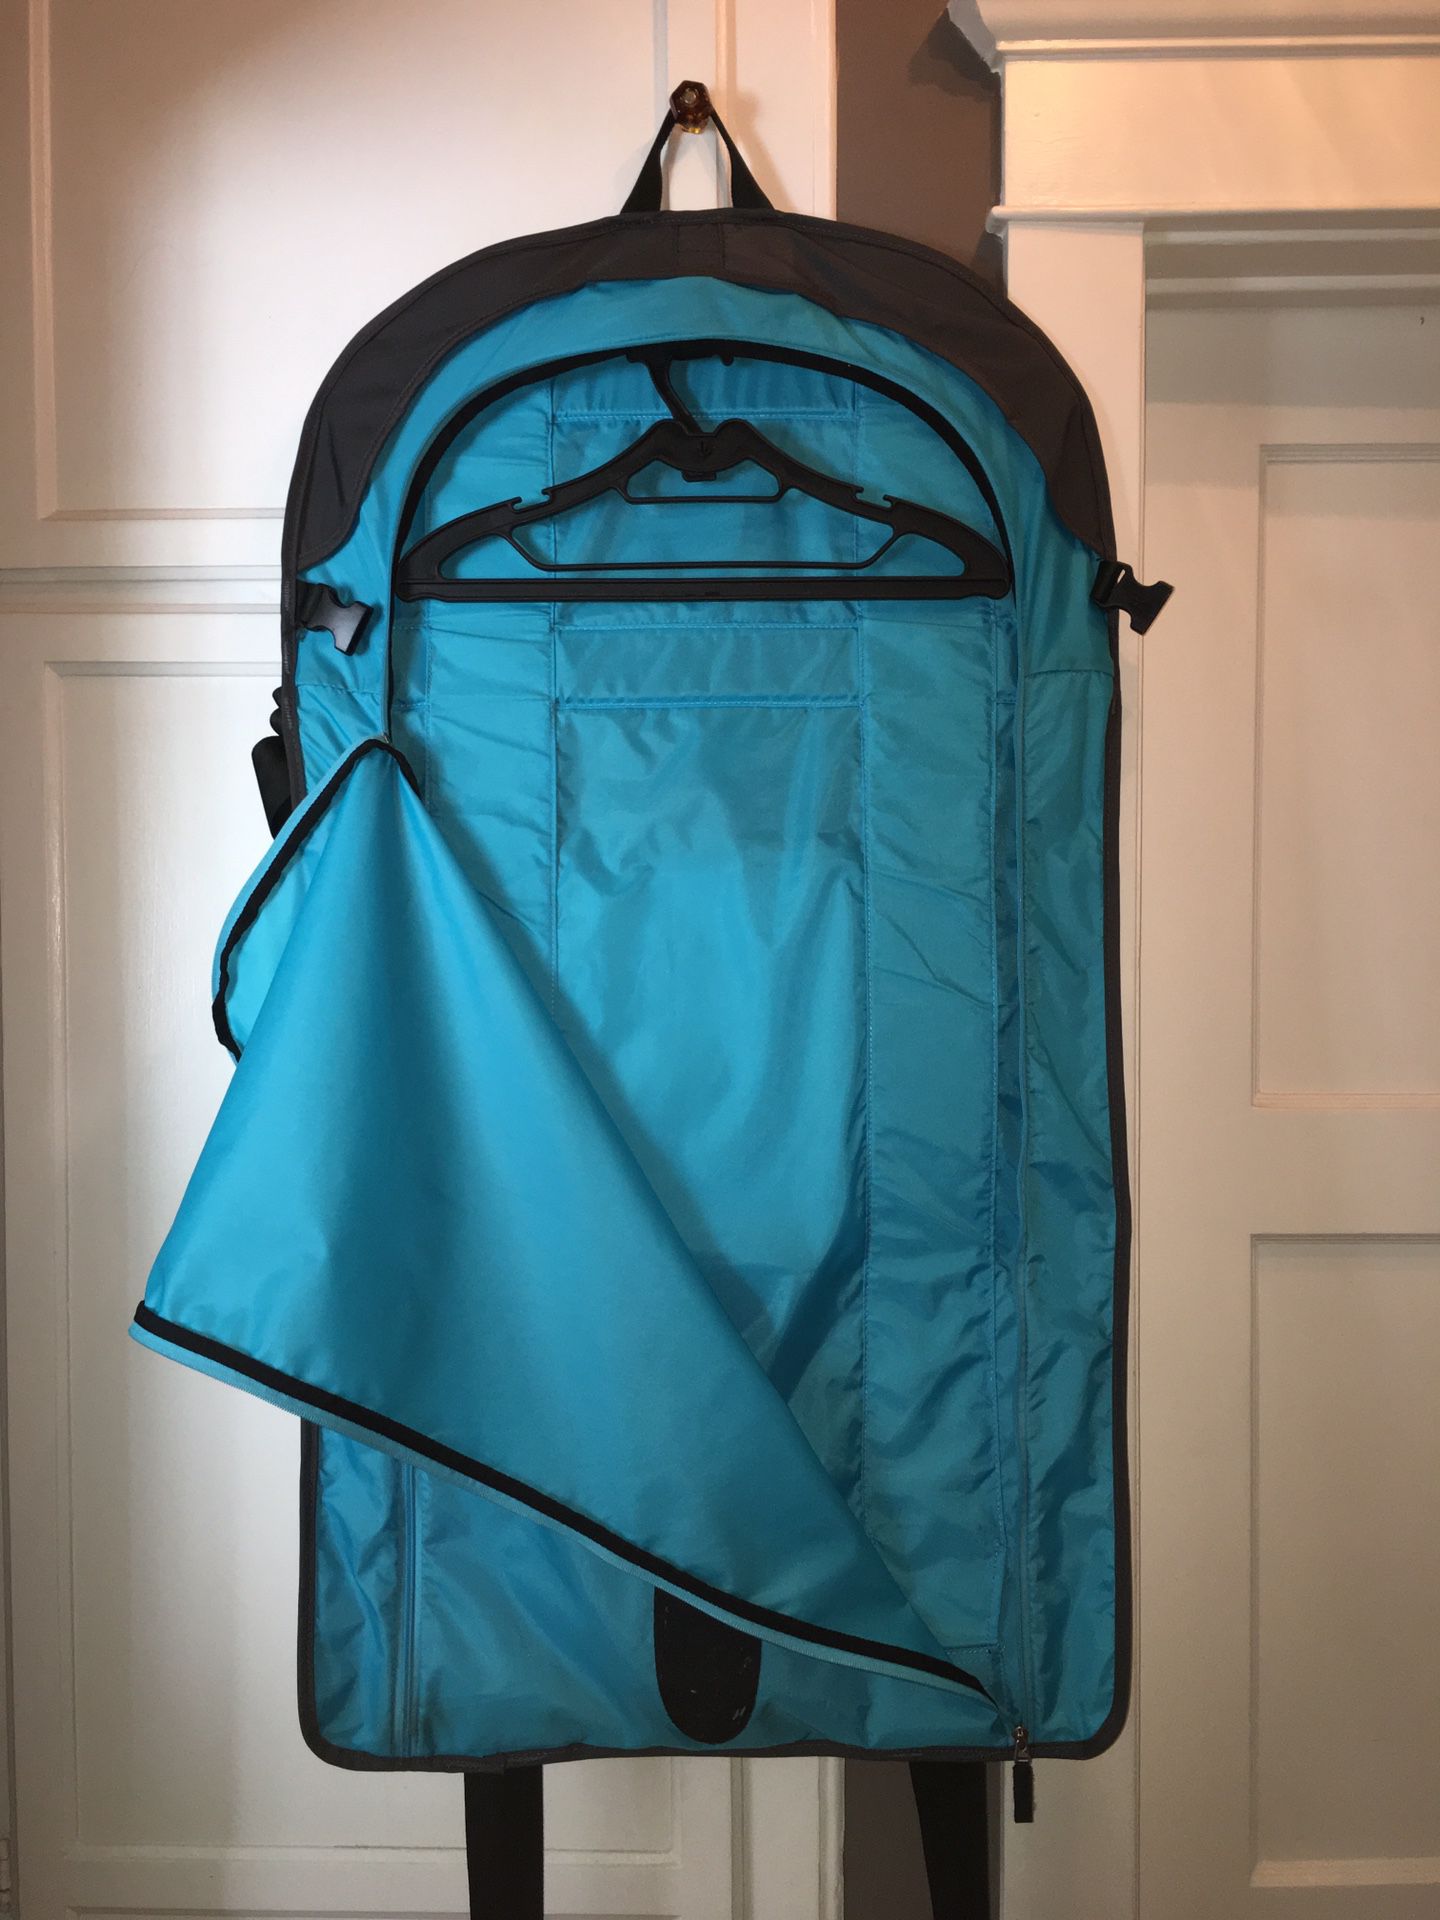 Excellent suit & garment bag perfect for travel